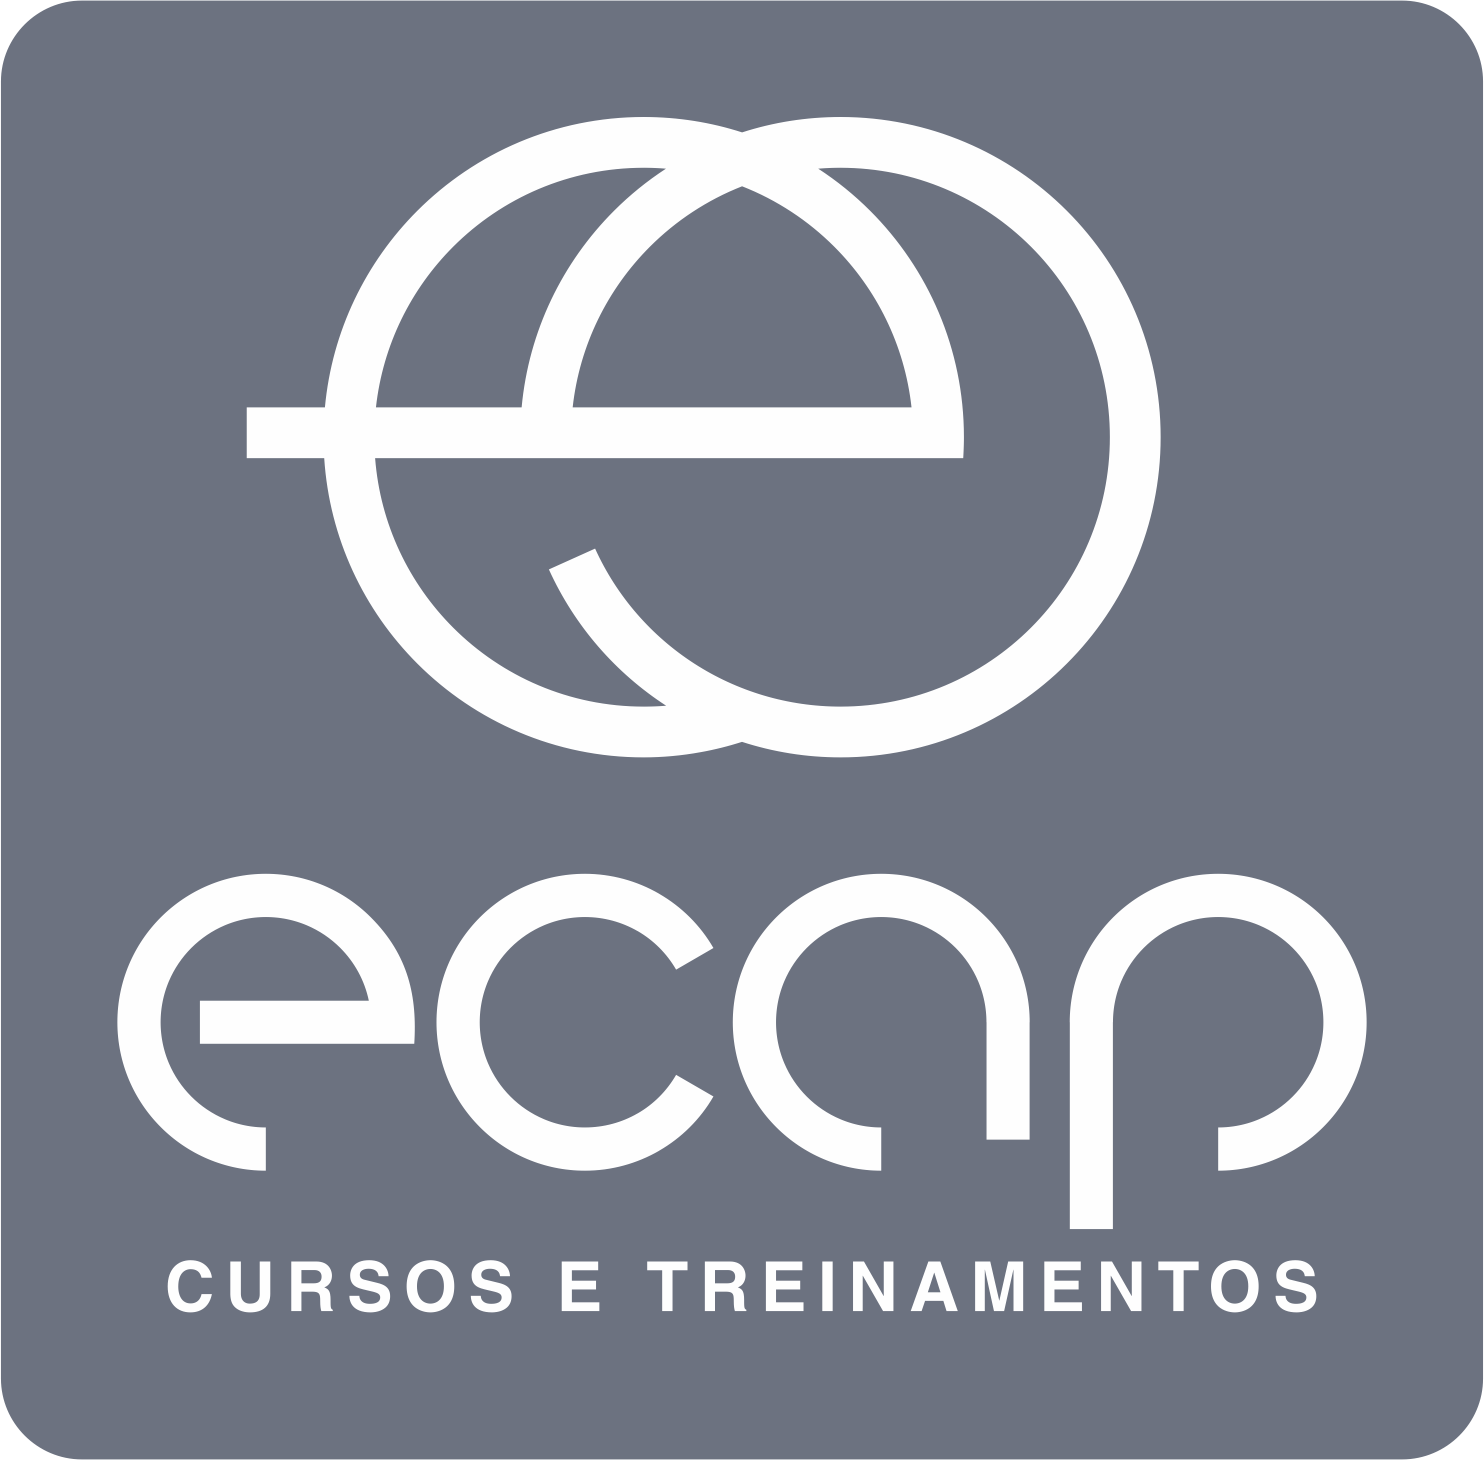 Cursos de Estética e Comstologia presencial e EAD em Fortaleza e Coworking